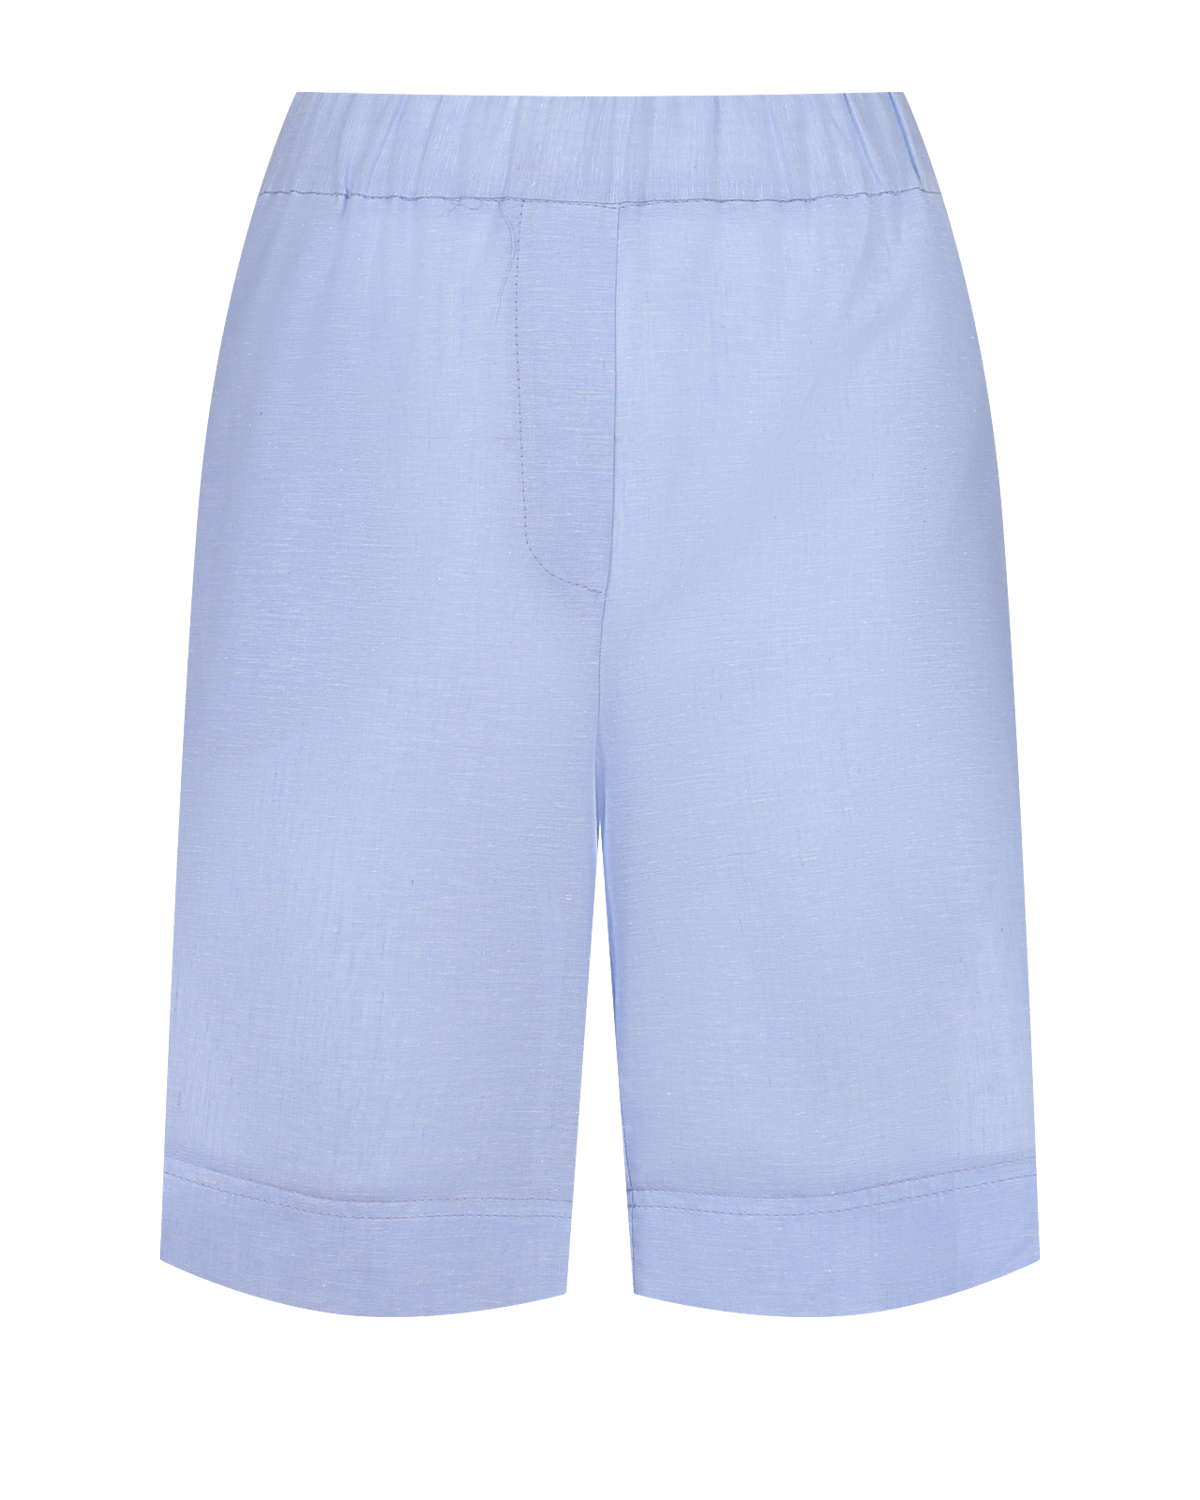 Шорты голубого цвета Pietro Brunelli белые шорты для беременных pietro brunelli